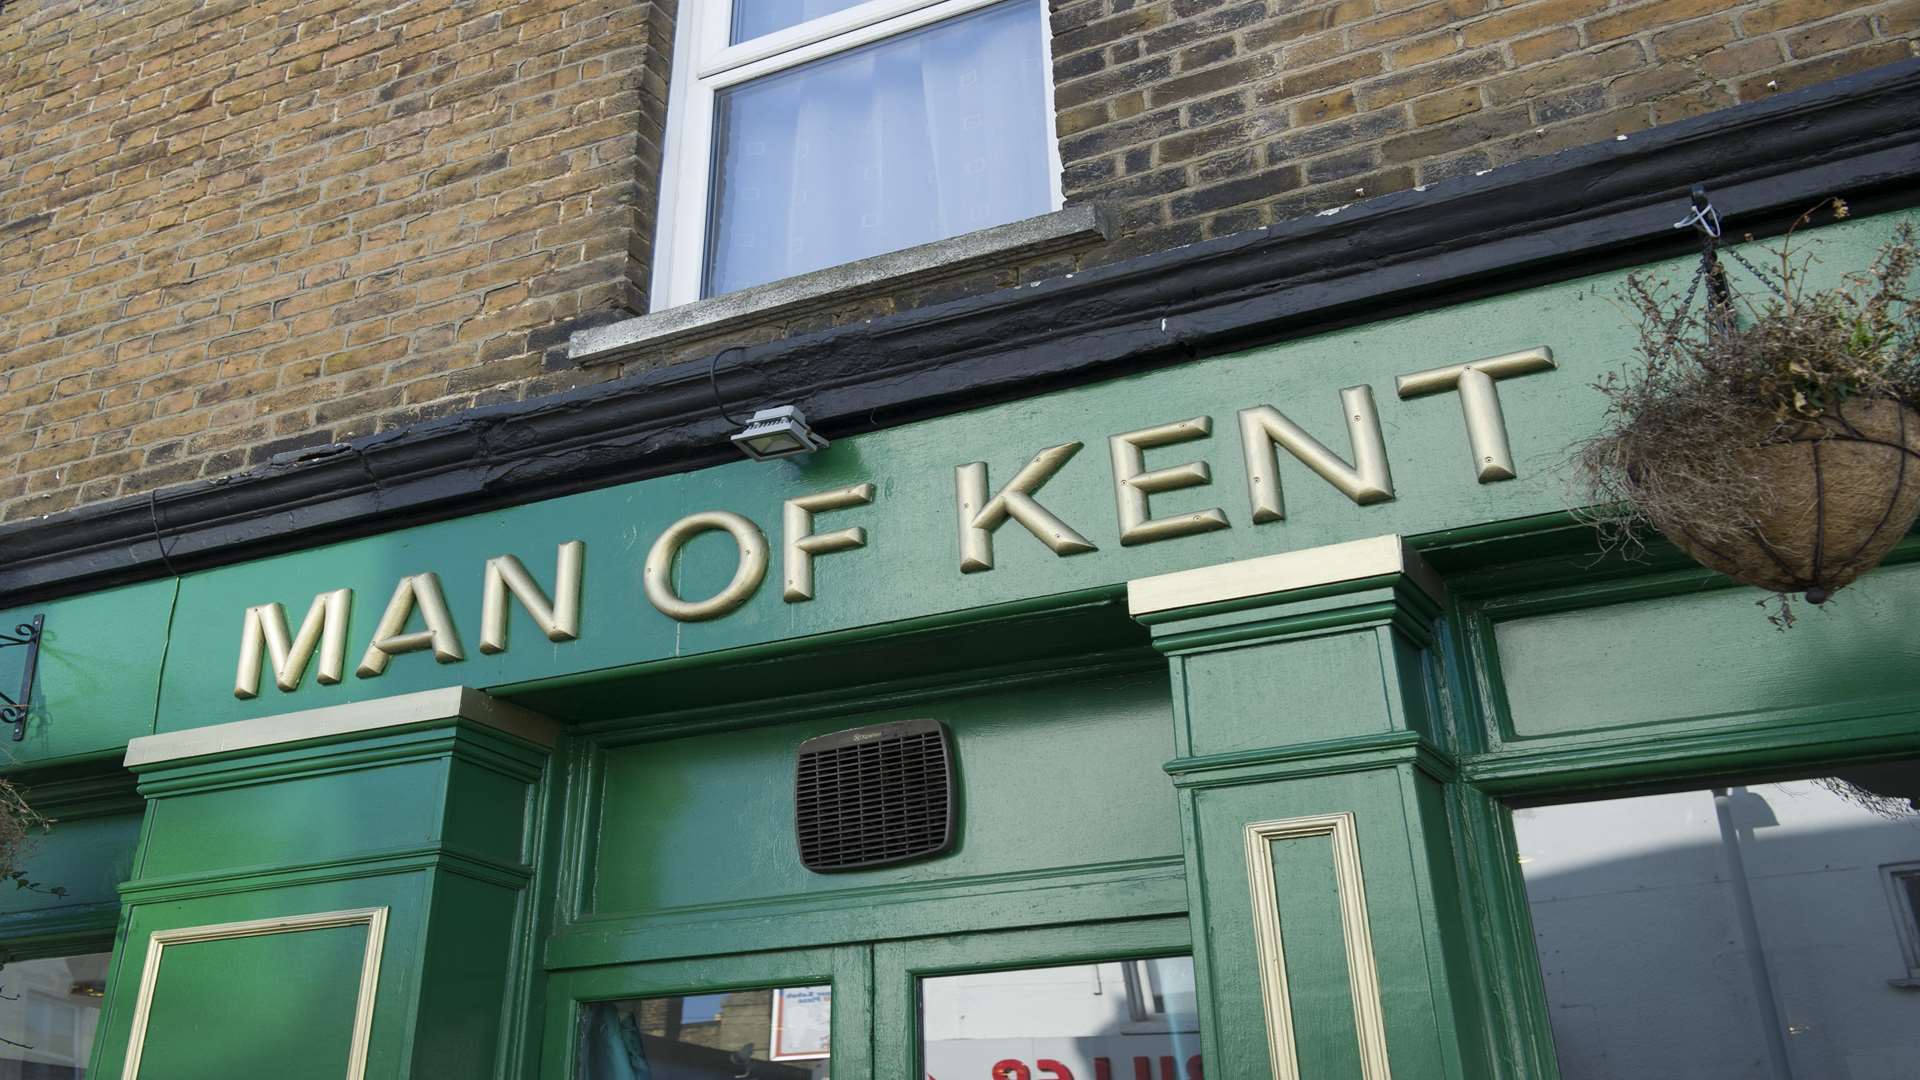 The Man of Kent pub in Wrotham Road